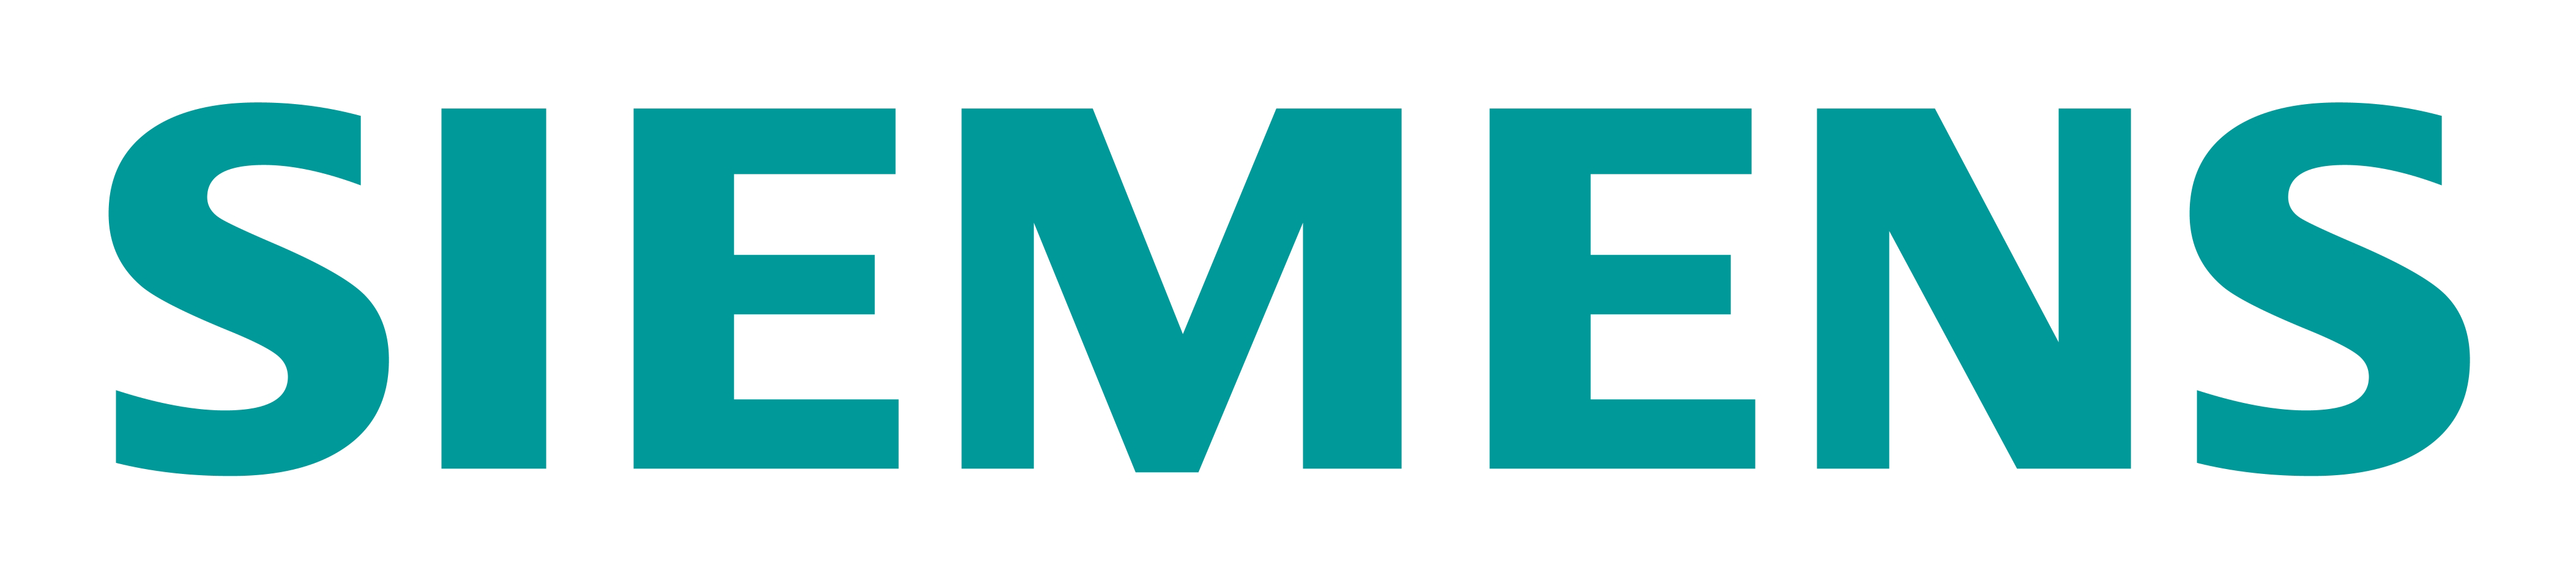 Siemens logo Download in HD Quality